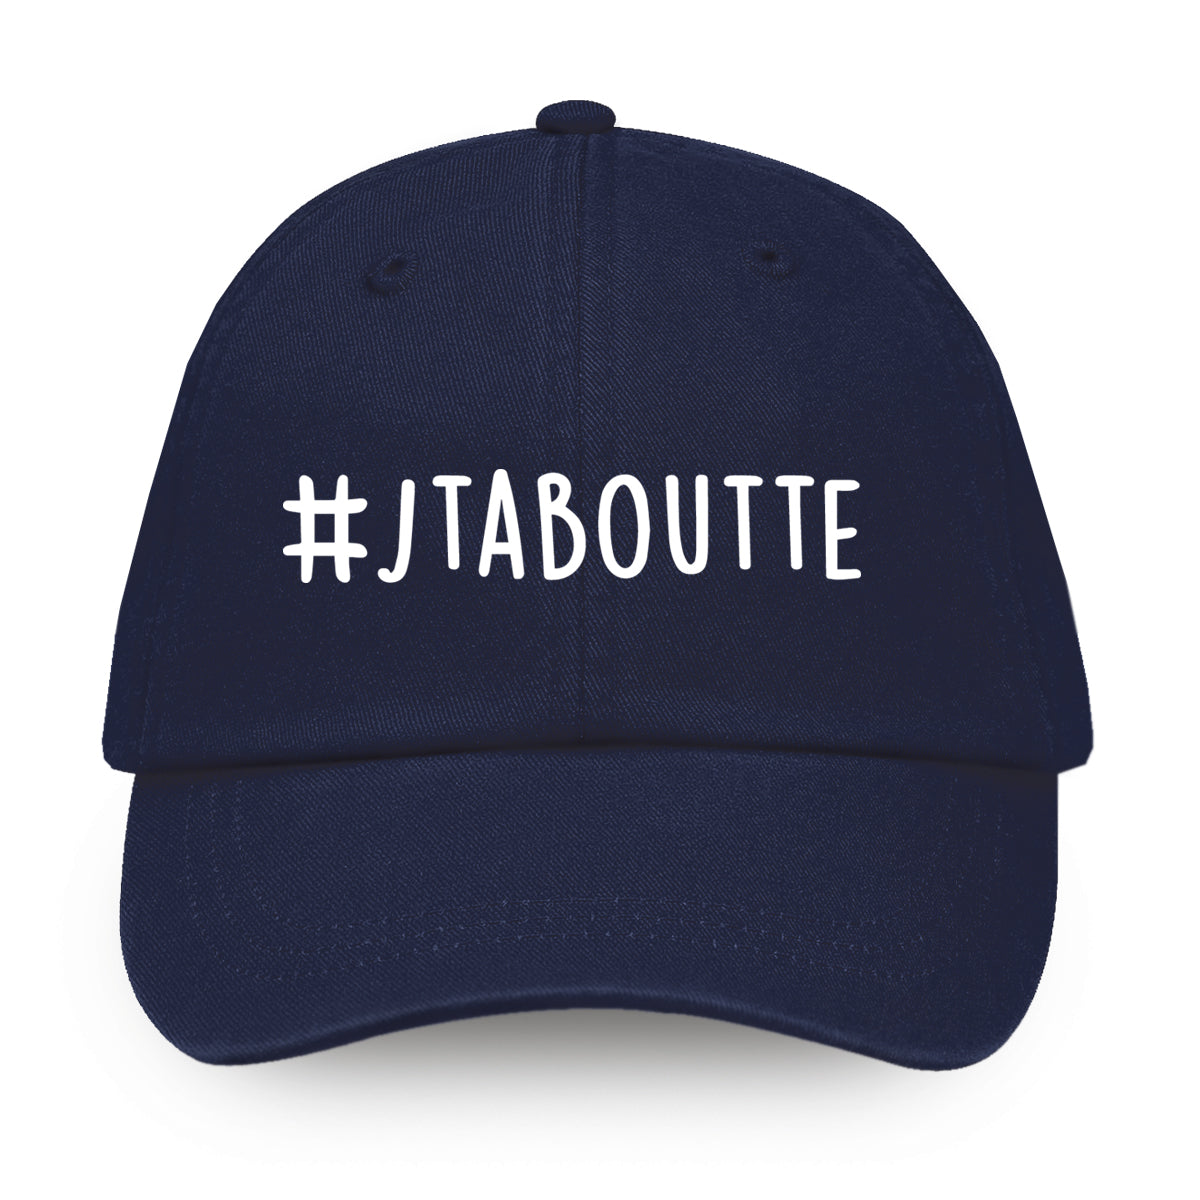 #JTABOUTTE